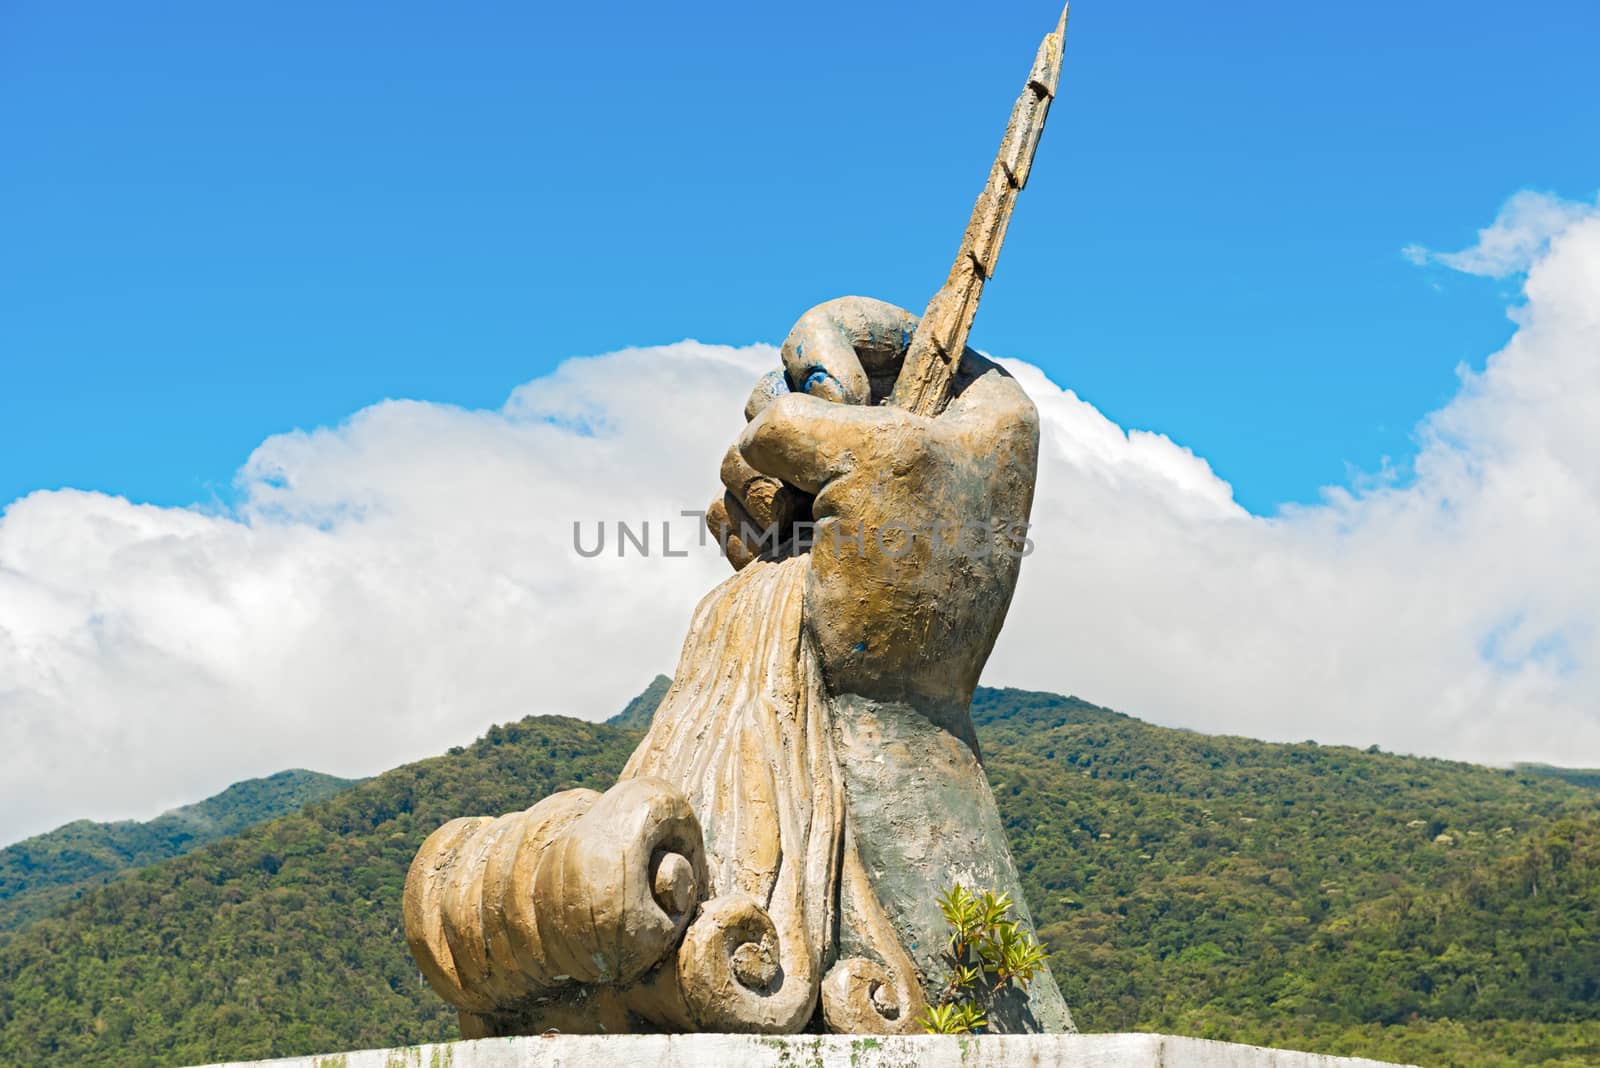 Fortuna Dam statue in Panama by Marcus